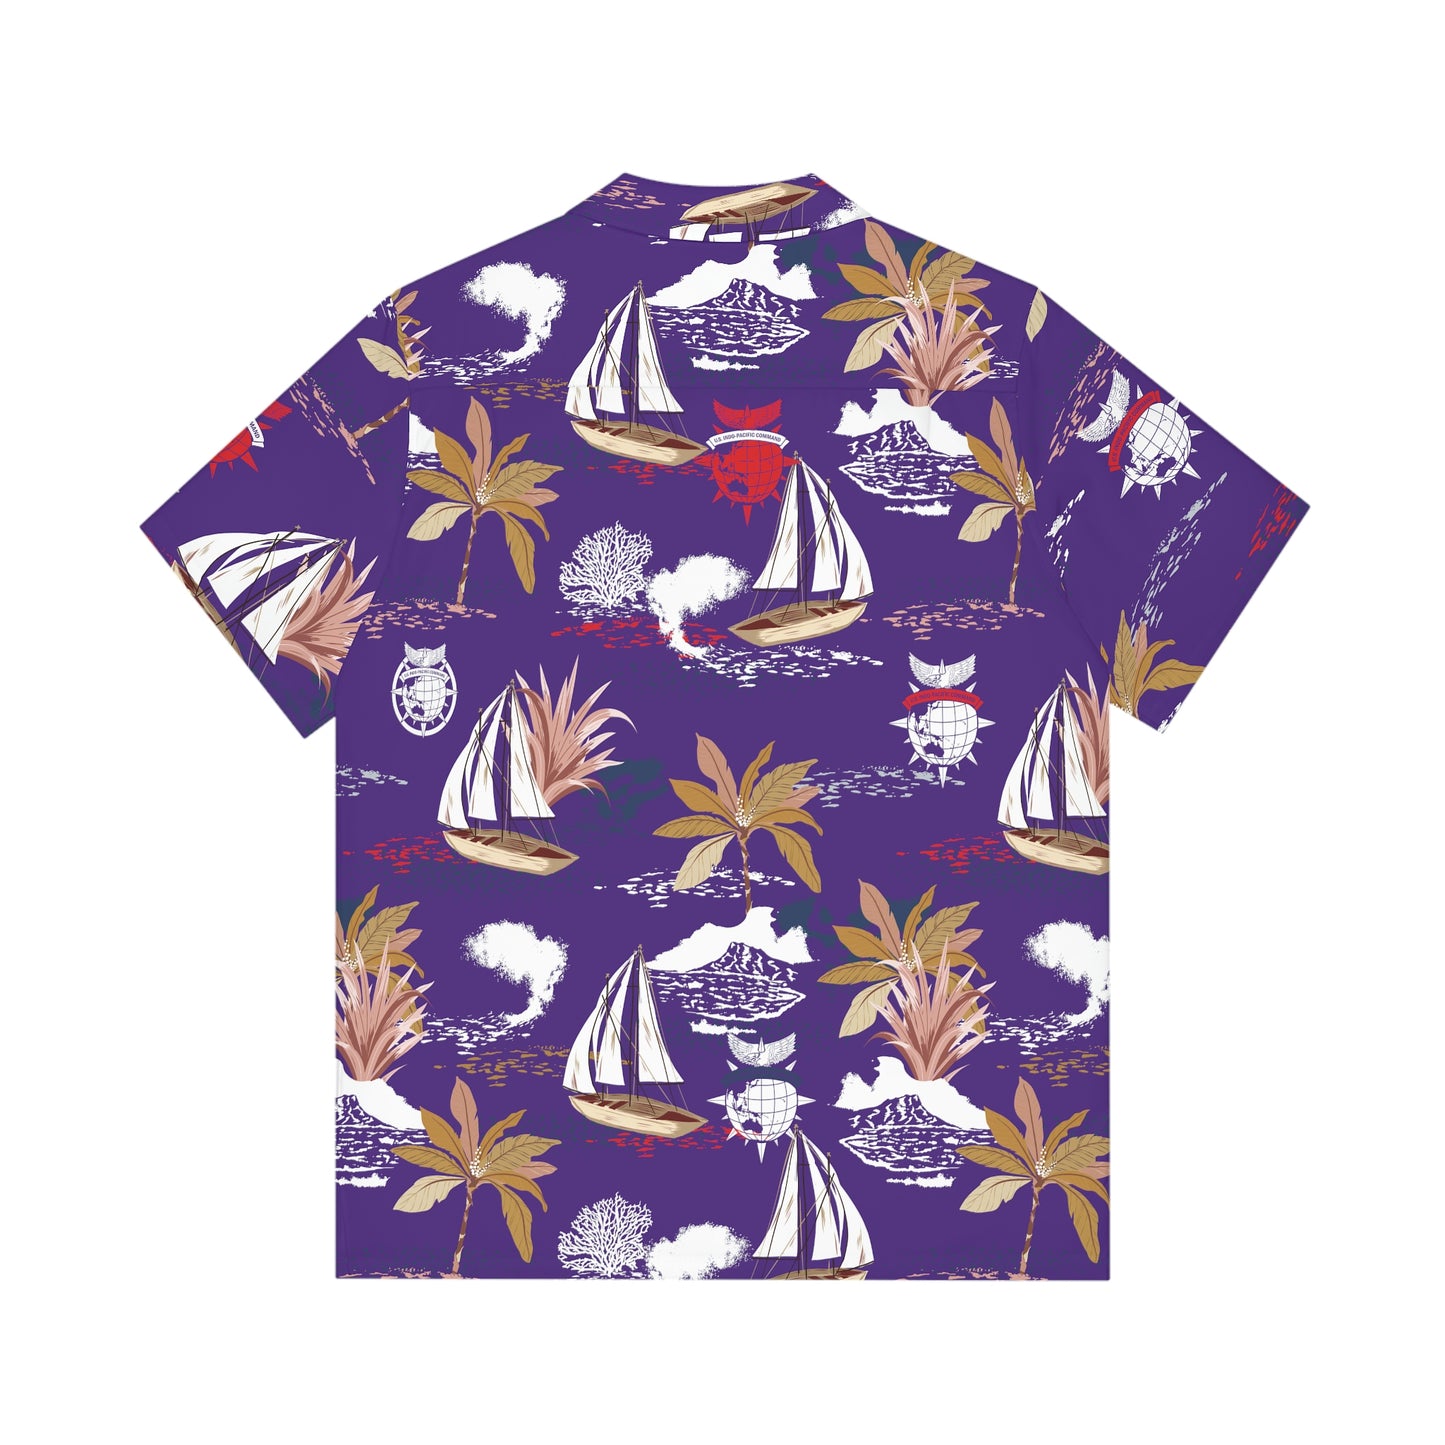 USINDOPACOM HQ Moloka'i Hawaiian Shirt